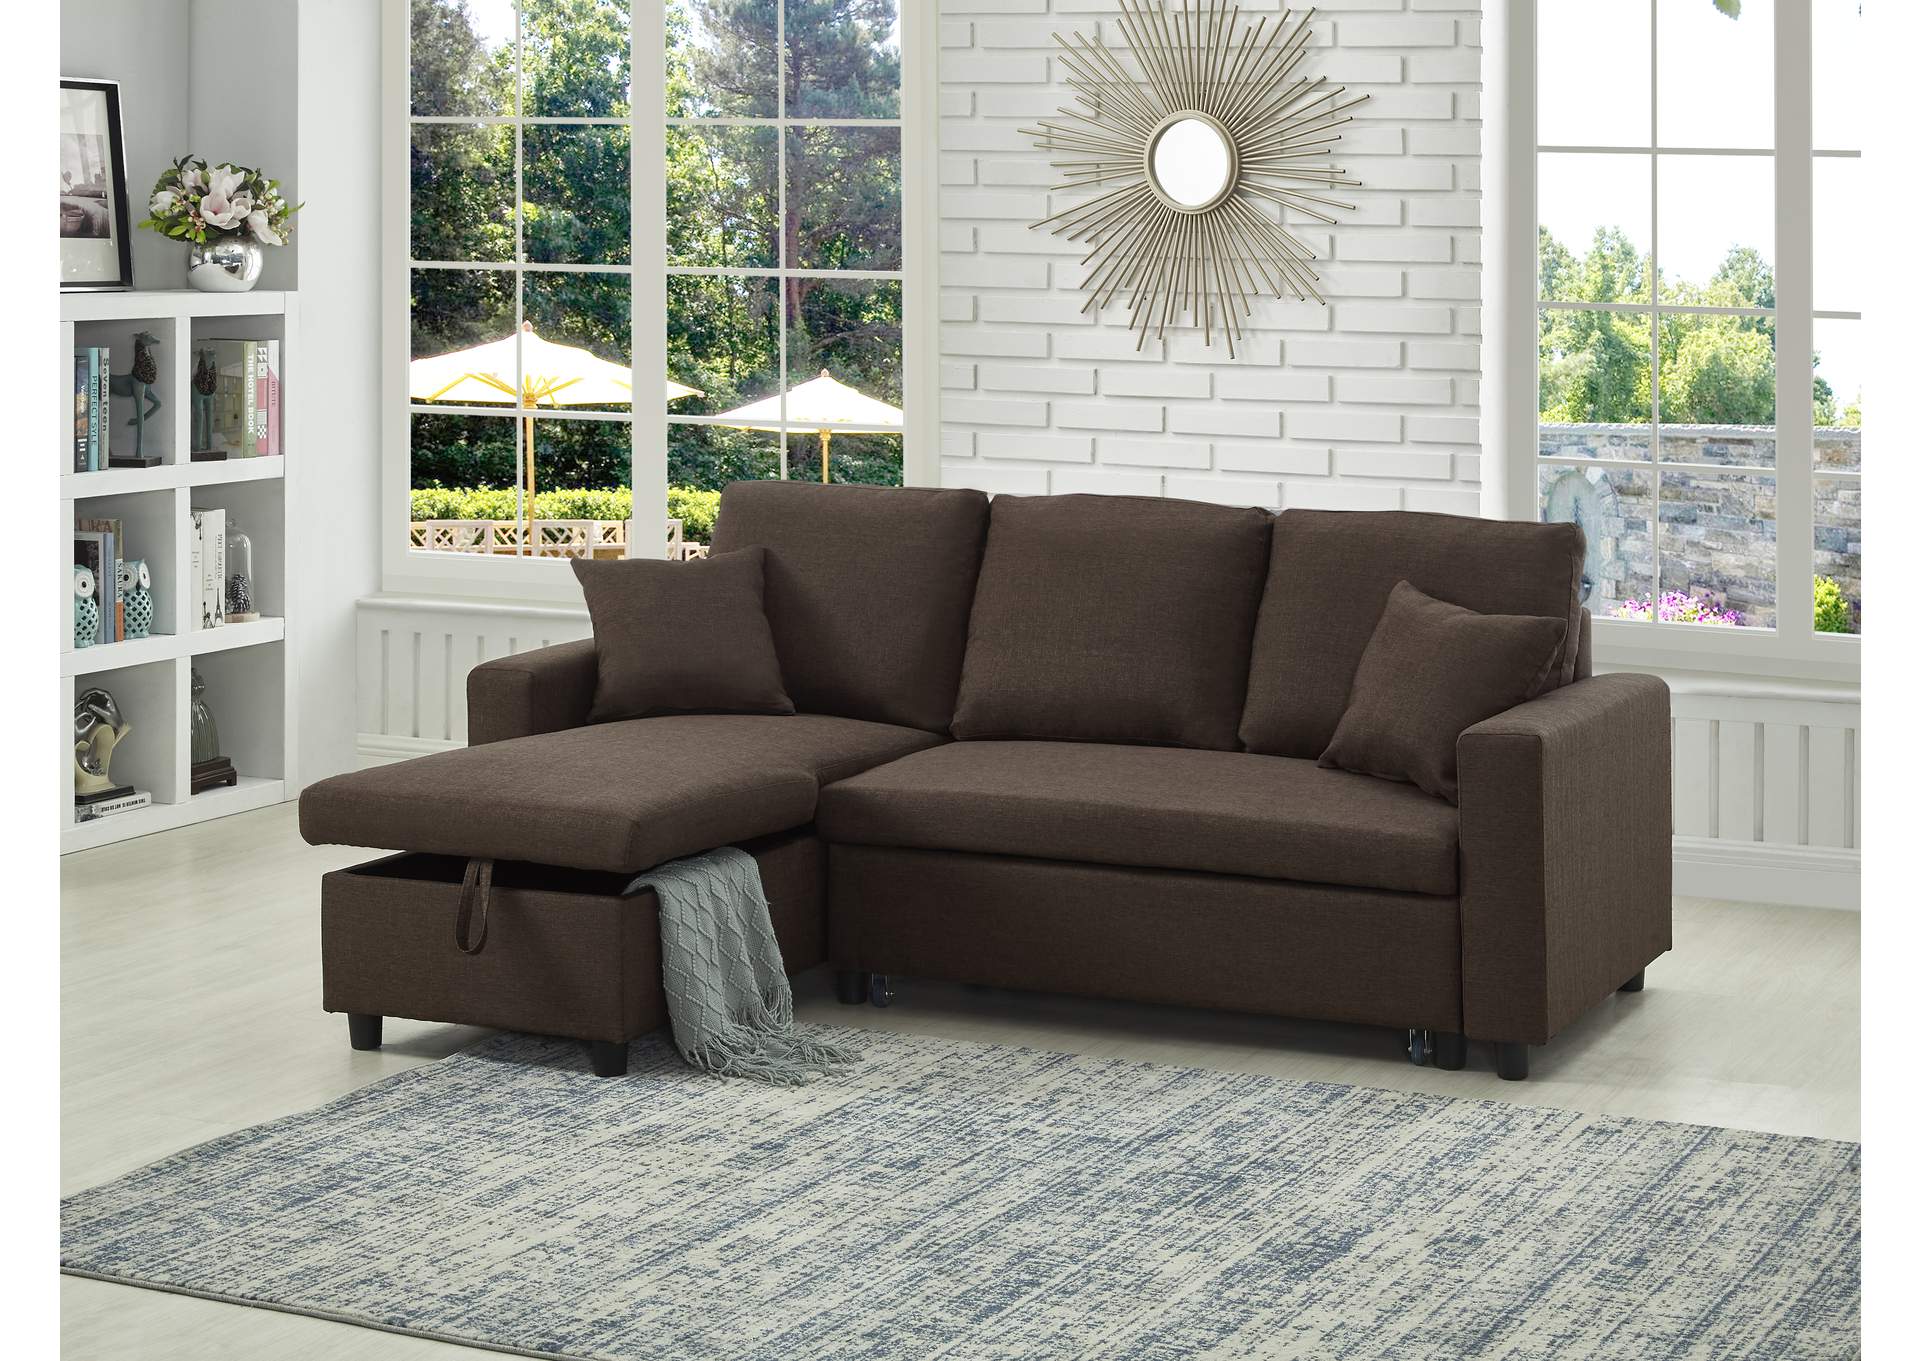 U320 Brown Linen Convertible Sofa,Global Trading